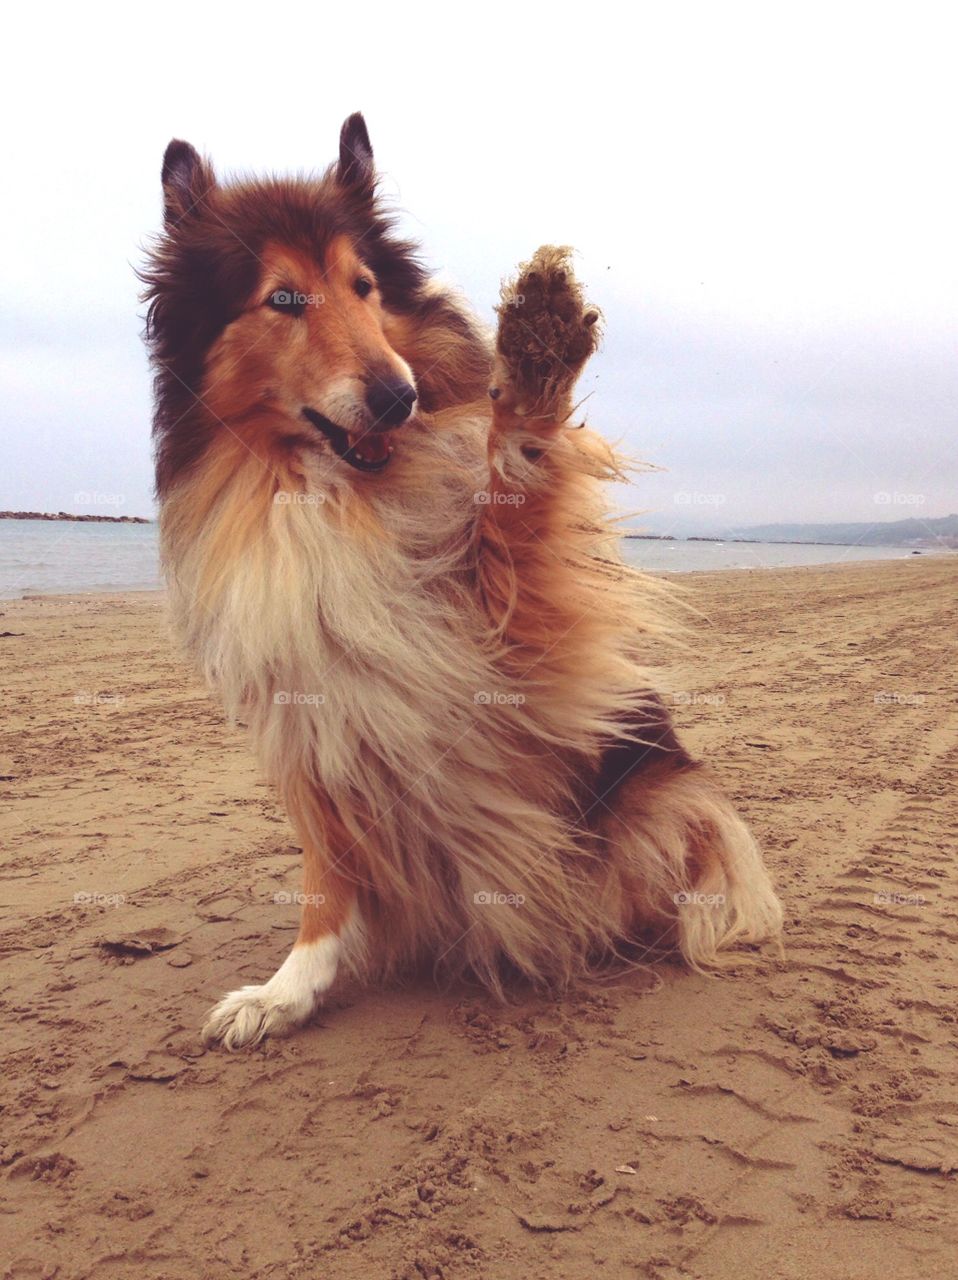 Hello Lassie!